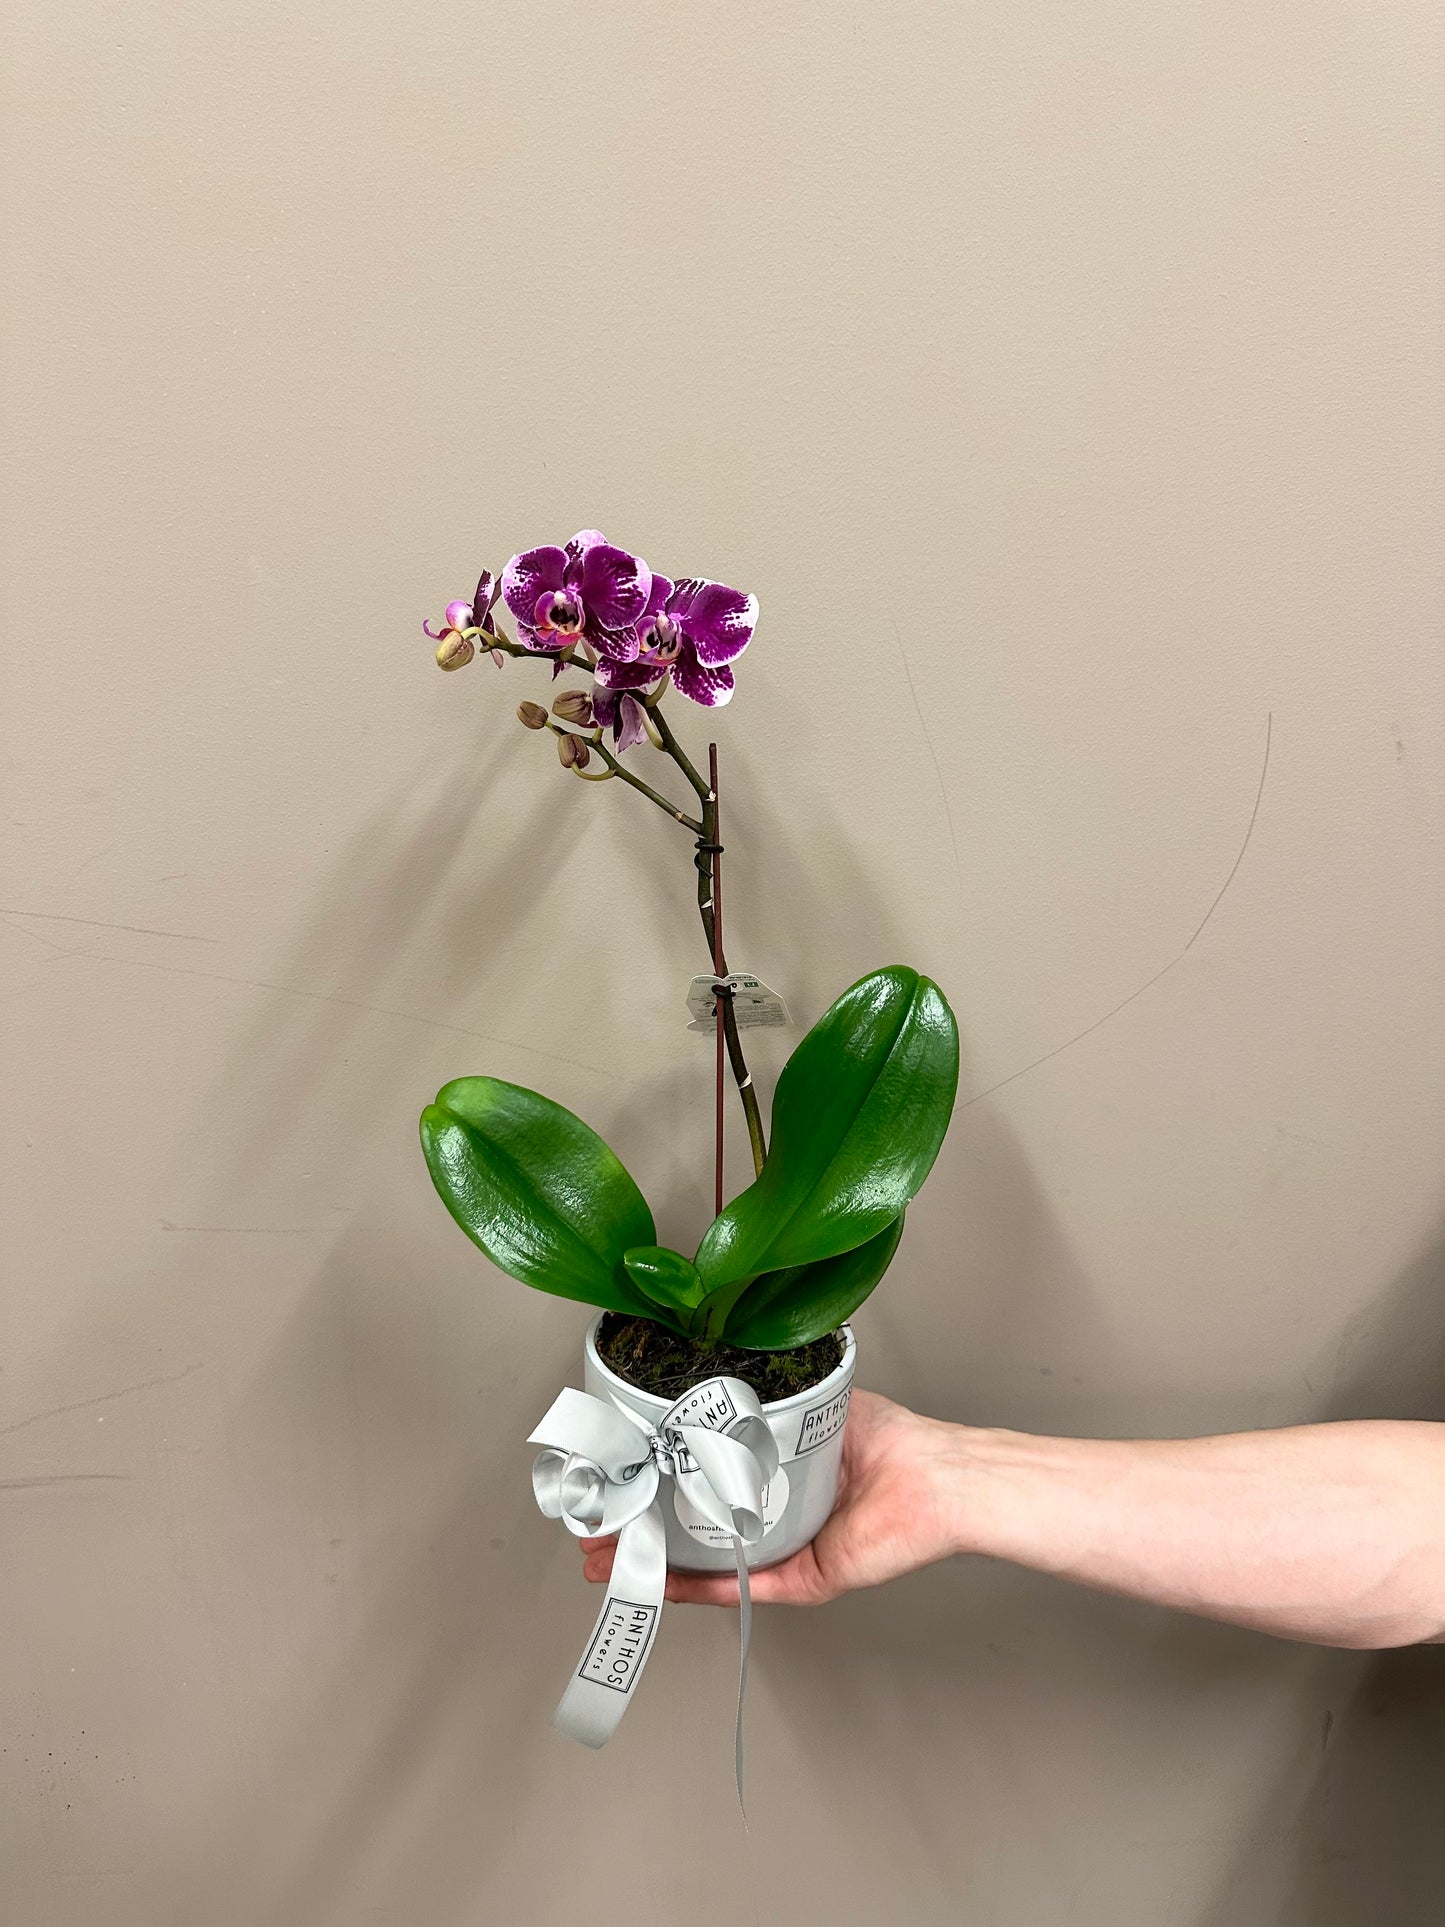 Single Stem Phalaenopsis Orchid Plant